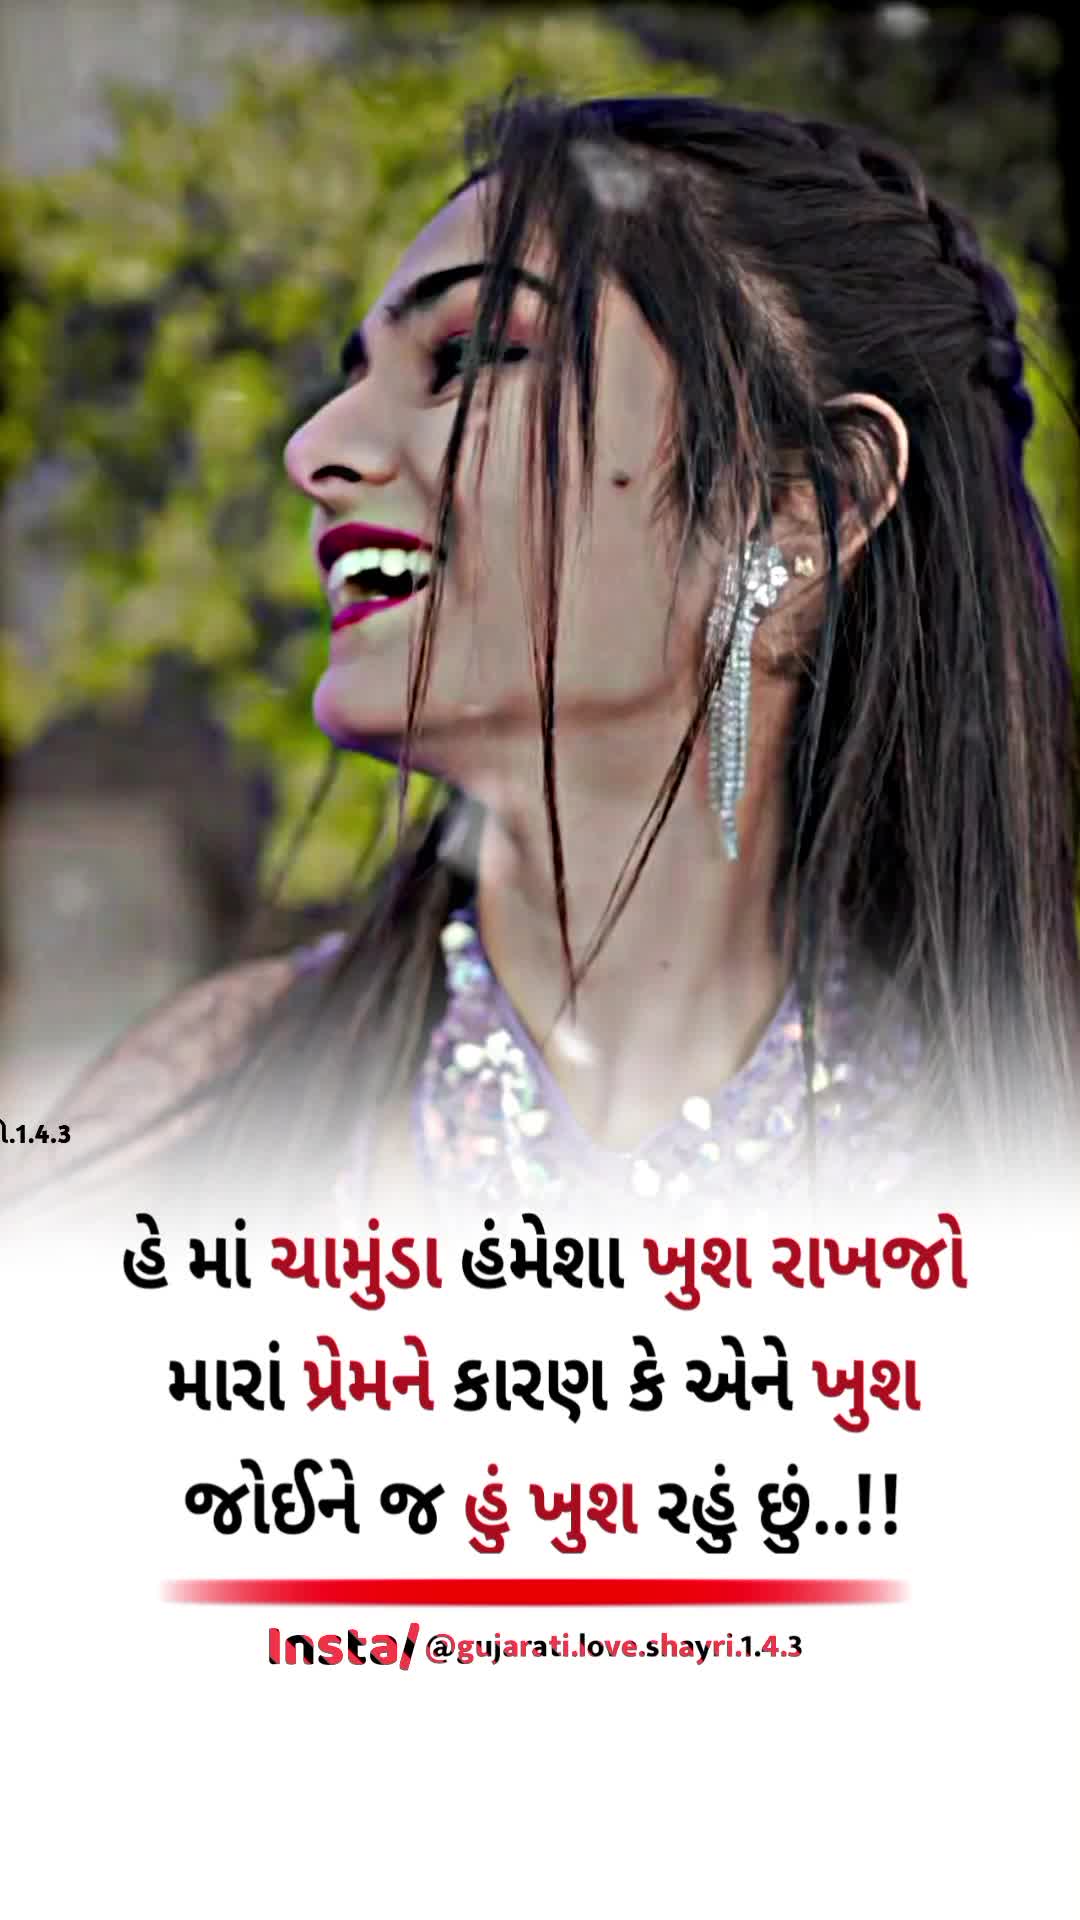 gujarati love shayari image